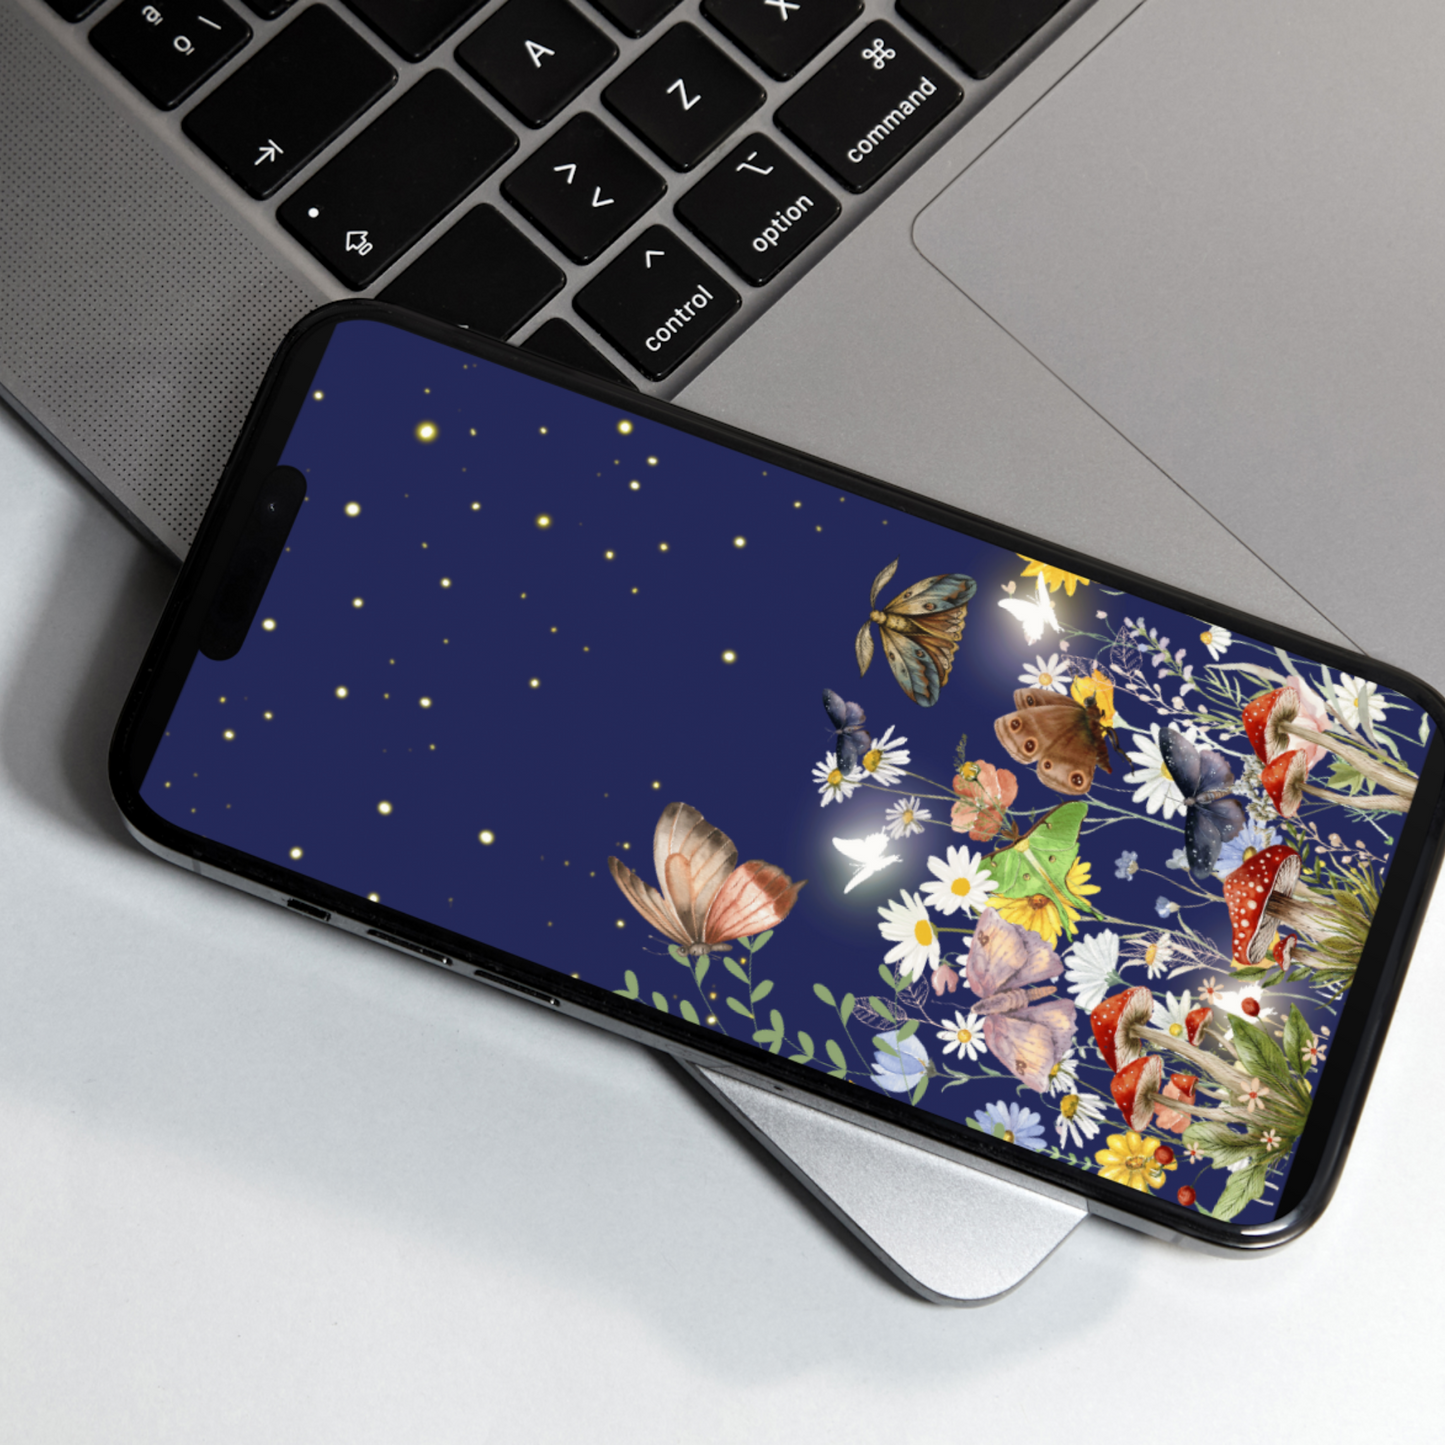 Night Sky Moth Phone Wallpaper - Flower and mushroom Digital Phone Wallpaper